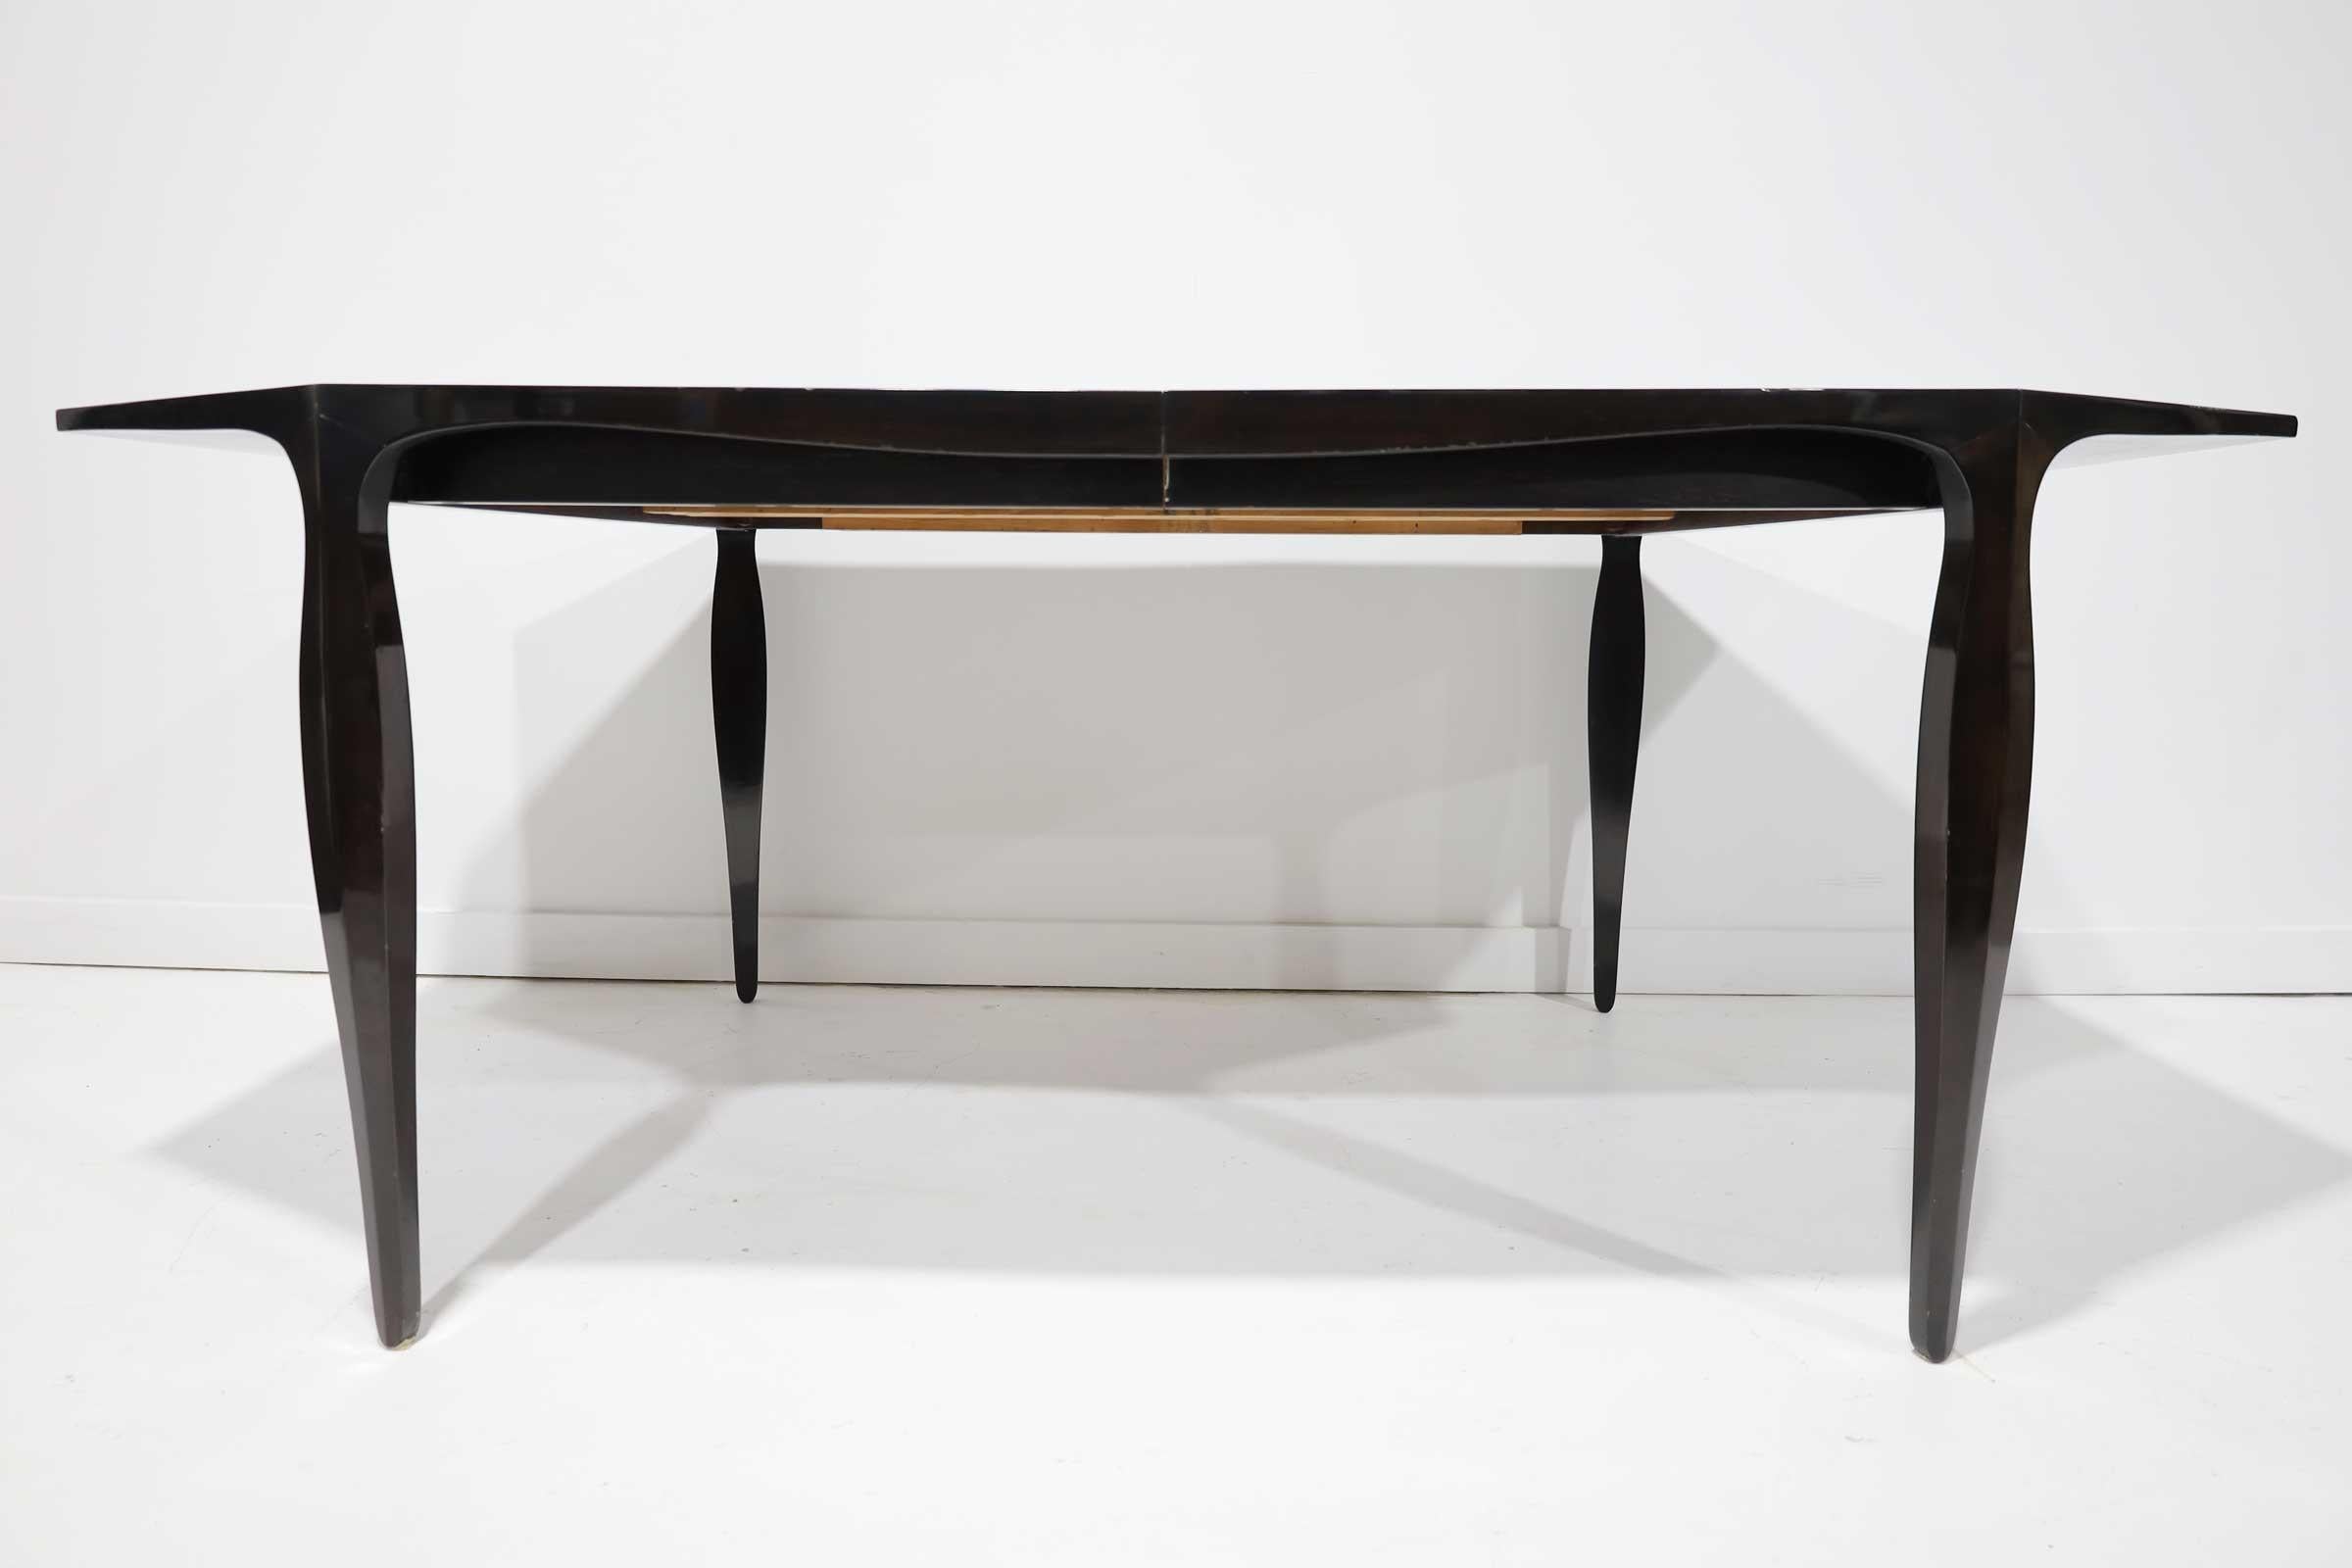 Mahogany Edward Wormley Model 5900 Dining Table by Dunbar